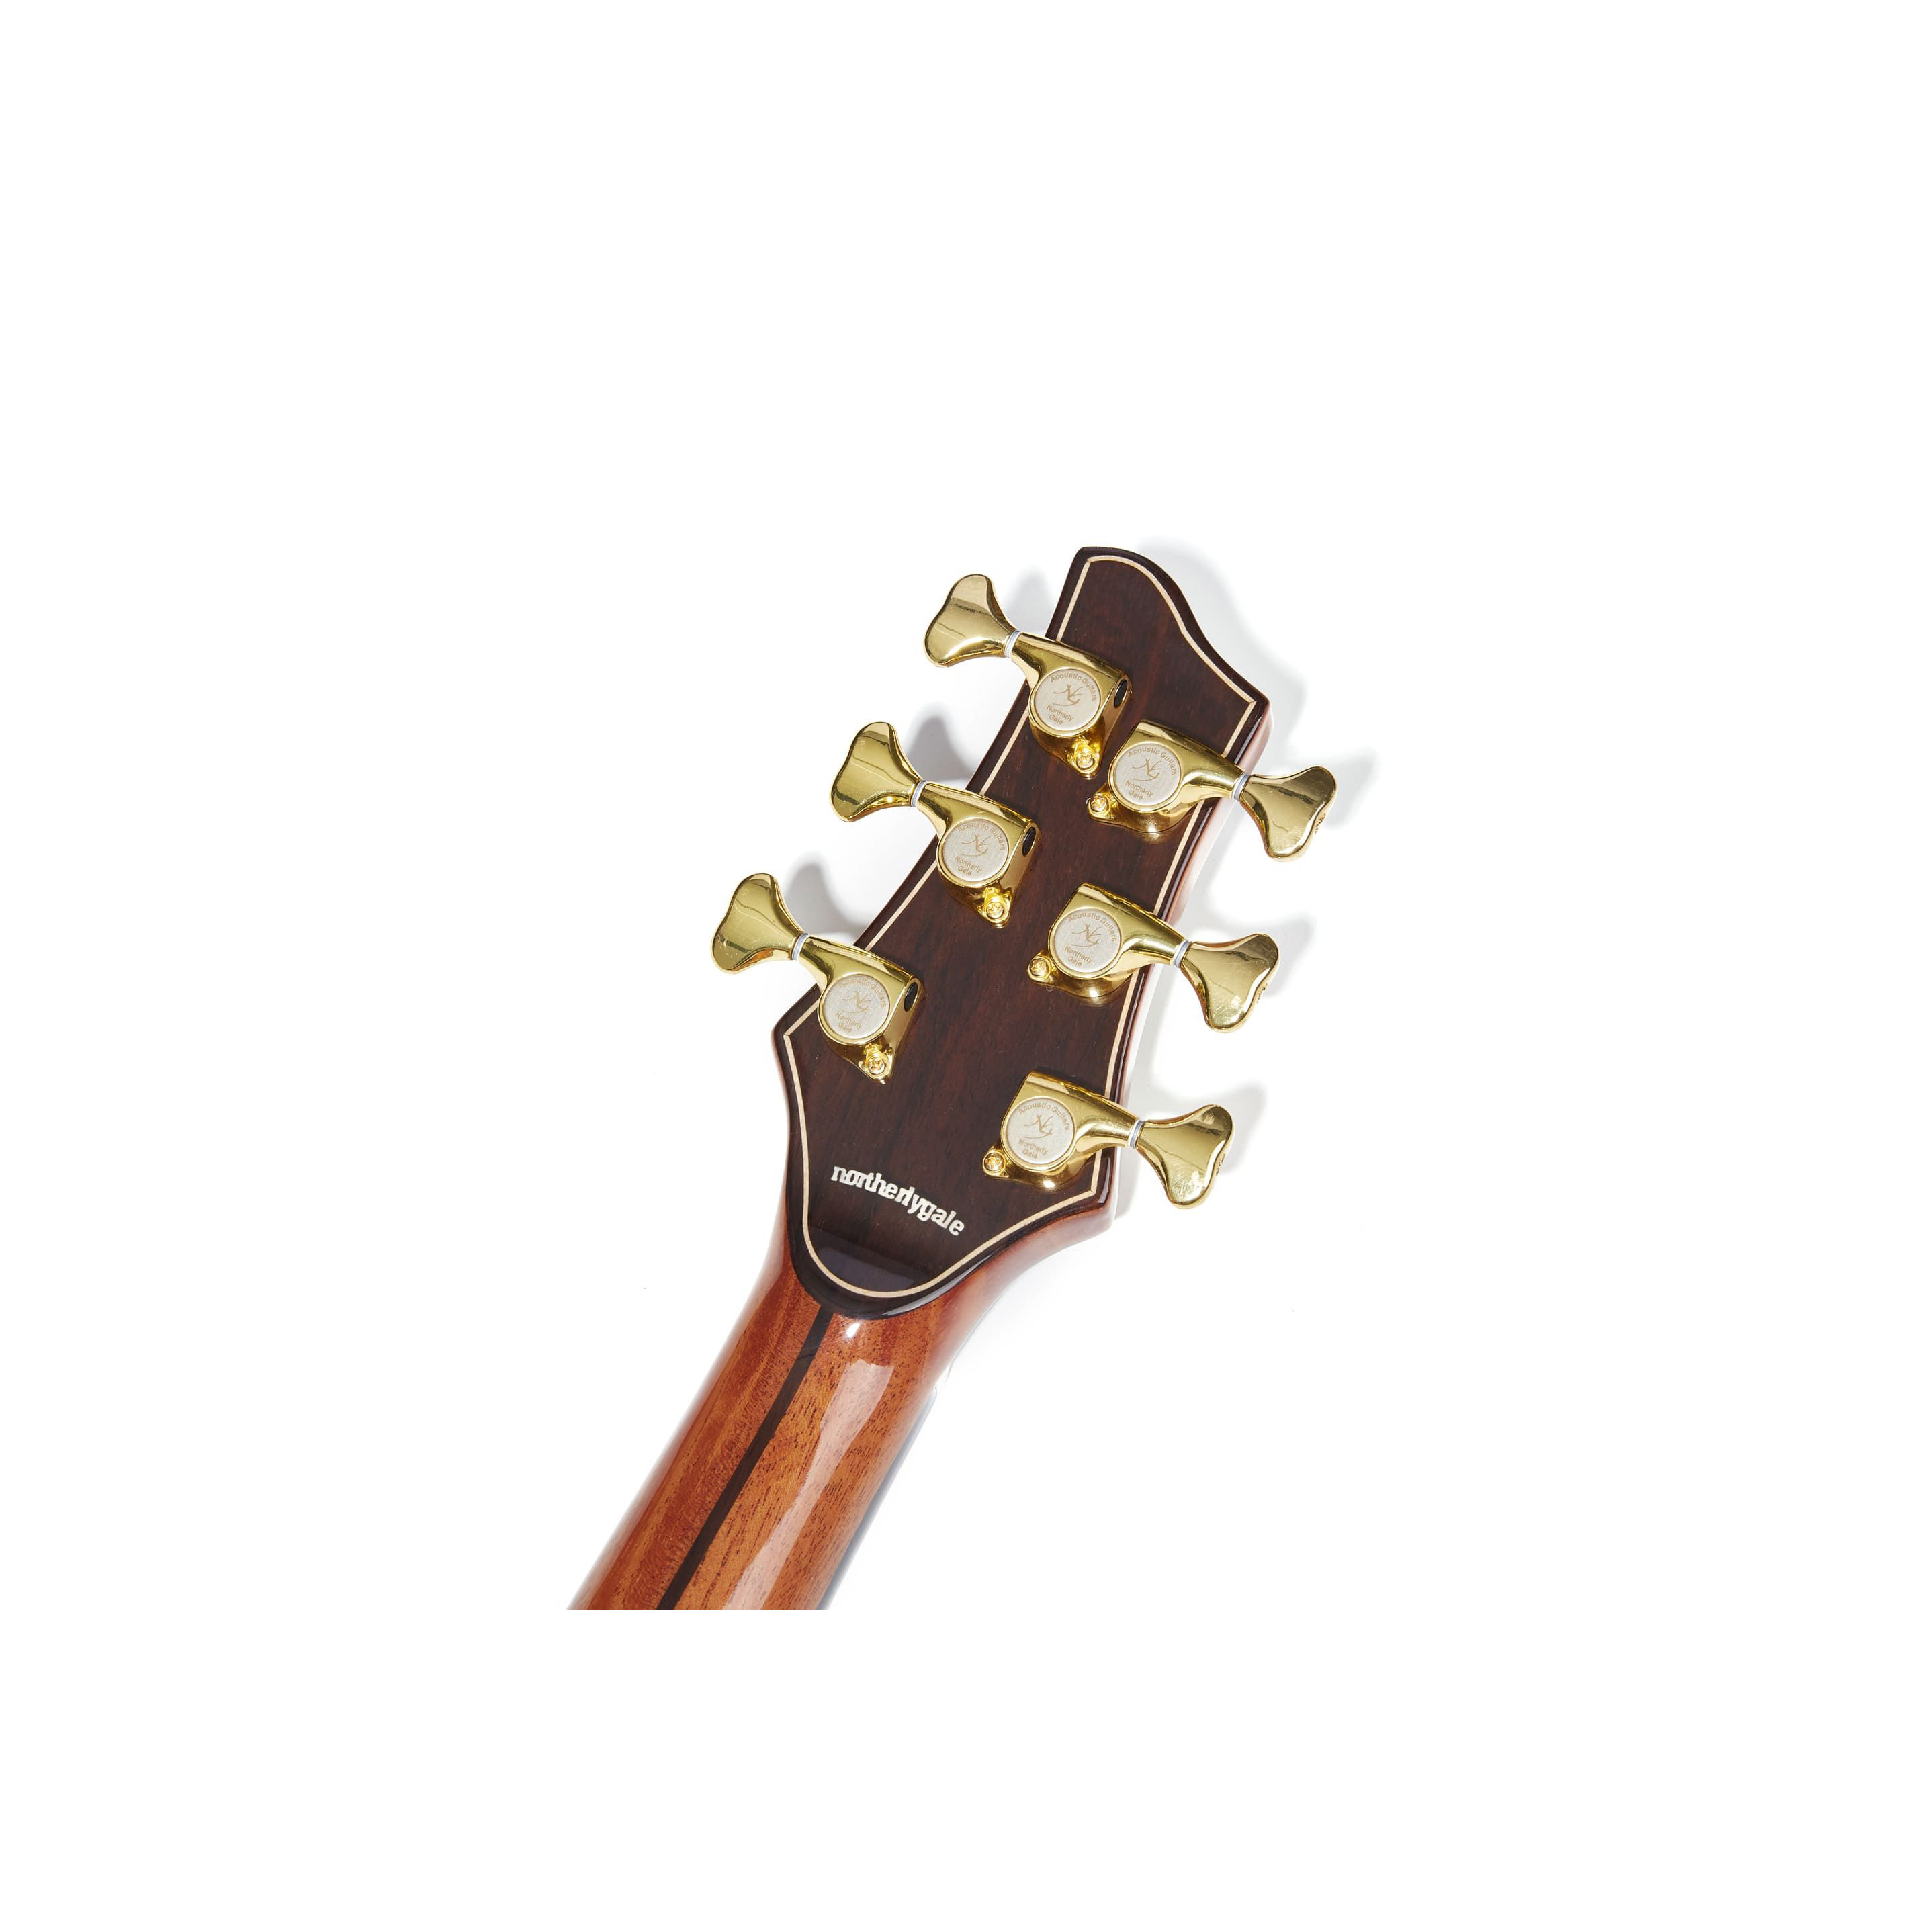 NG DM411SC NA Акустические гитары